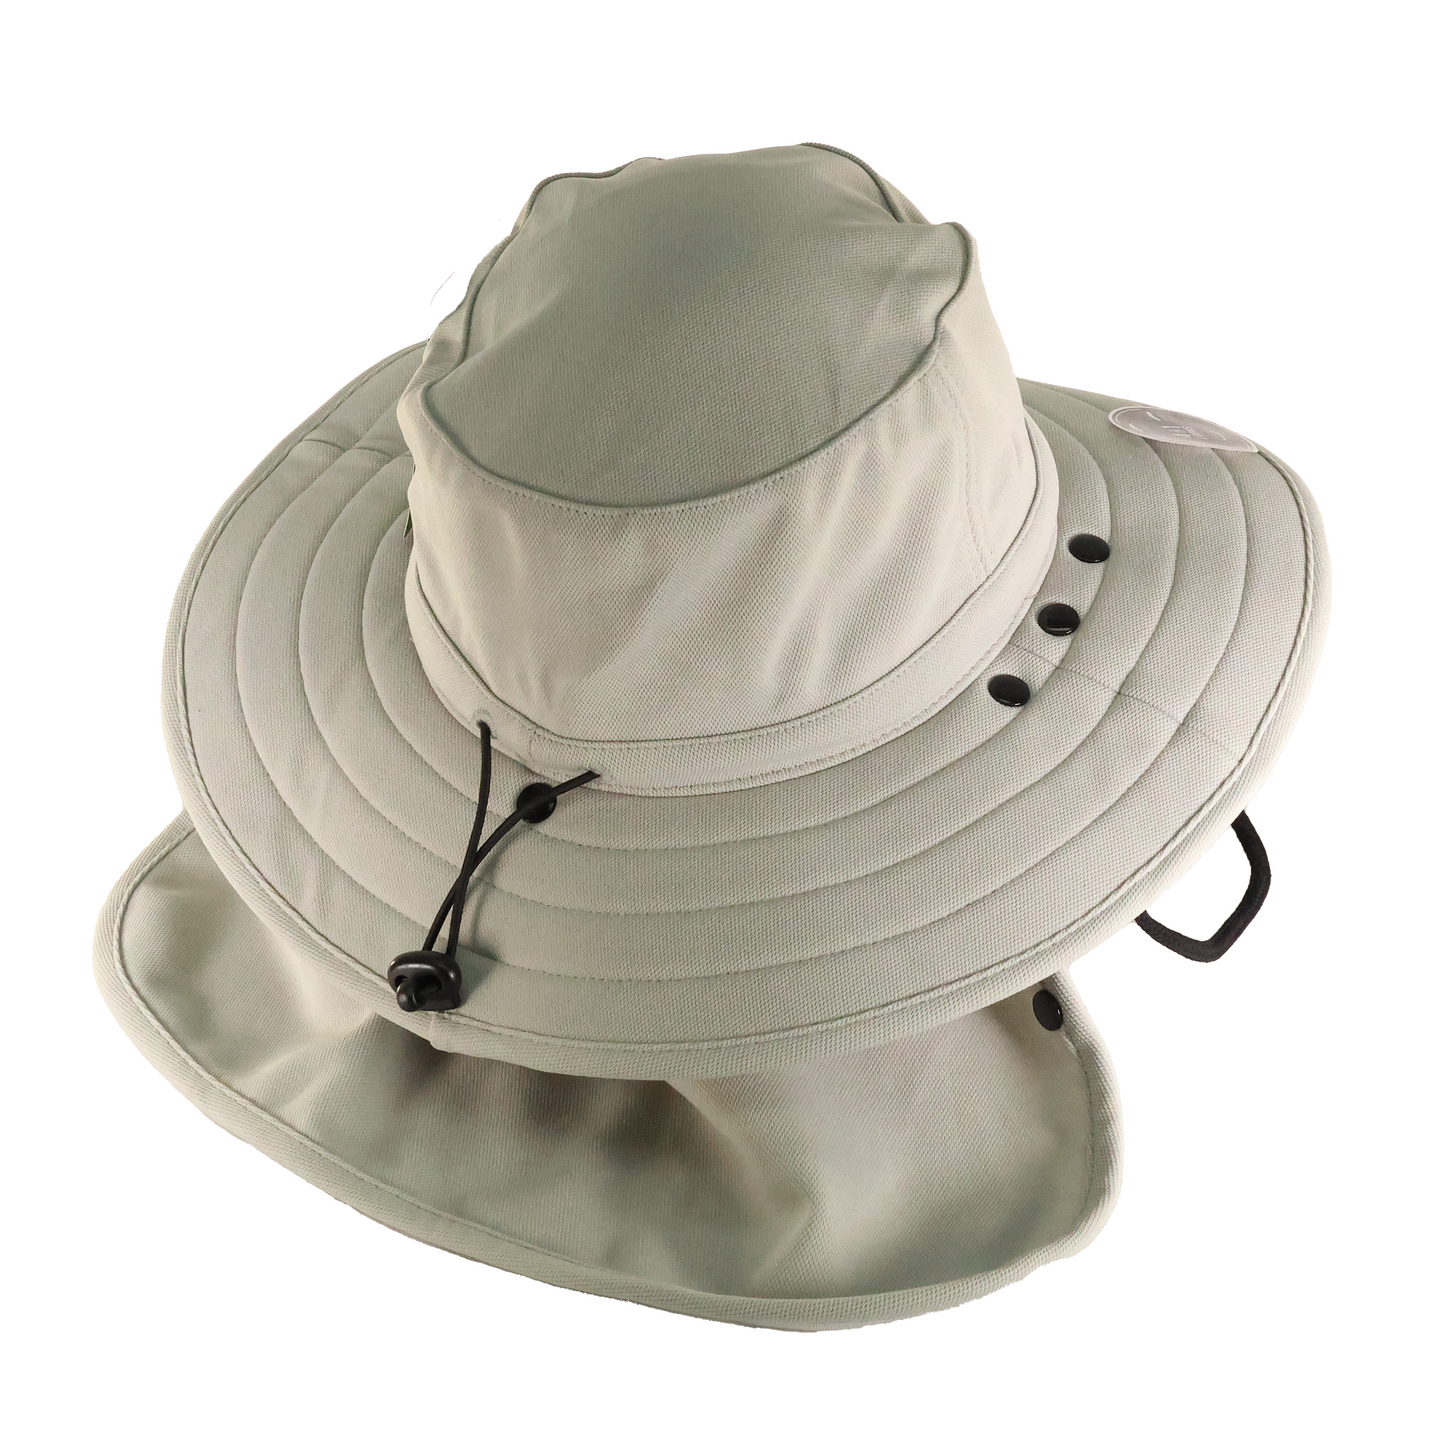 John Deere Ivory Trademark Mask & Bucket Hat - LP83277